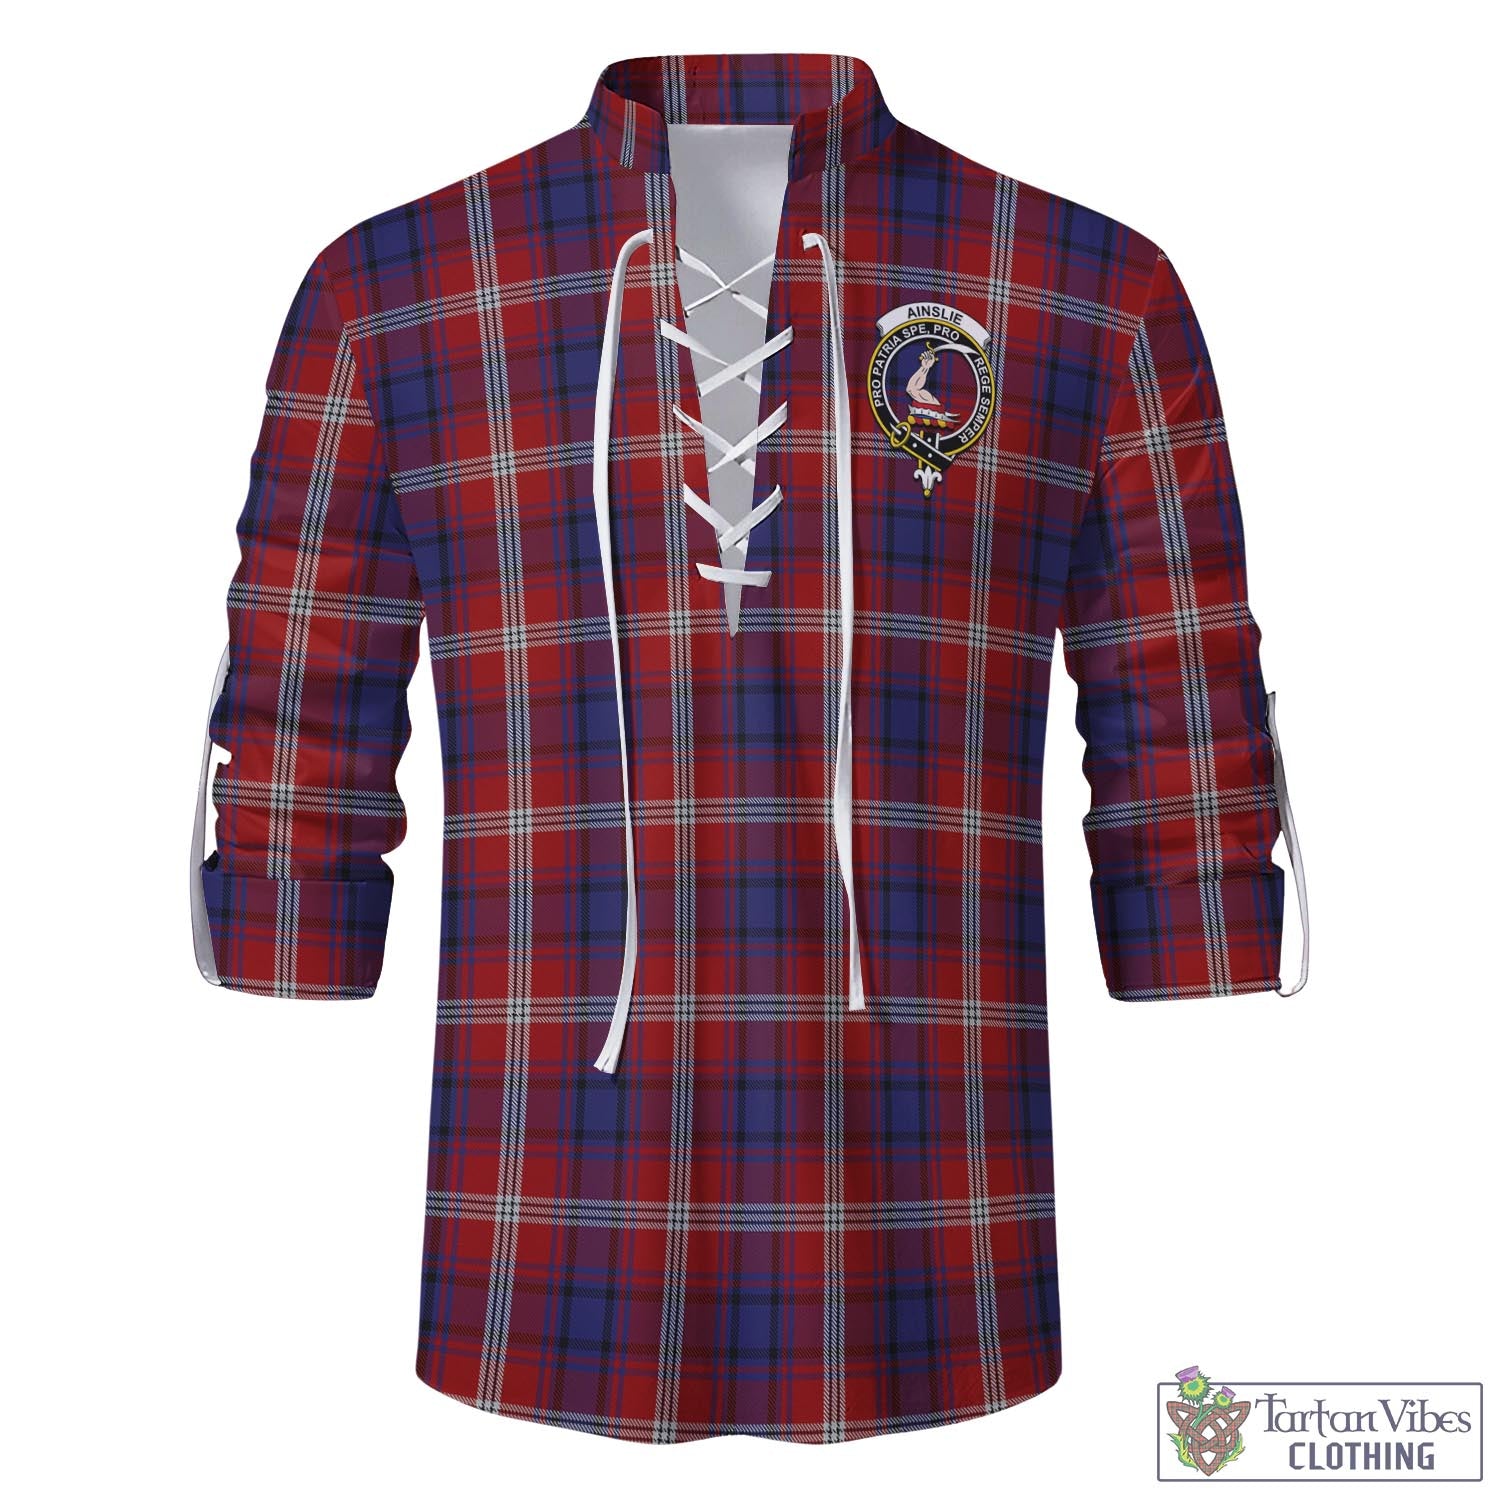 Tartan Vibes Clothing Ainslie Tartan Men's Scottish Traditional Jacobite Ghillie Kilt Shirt with Family Crest